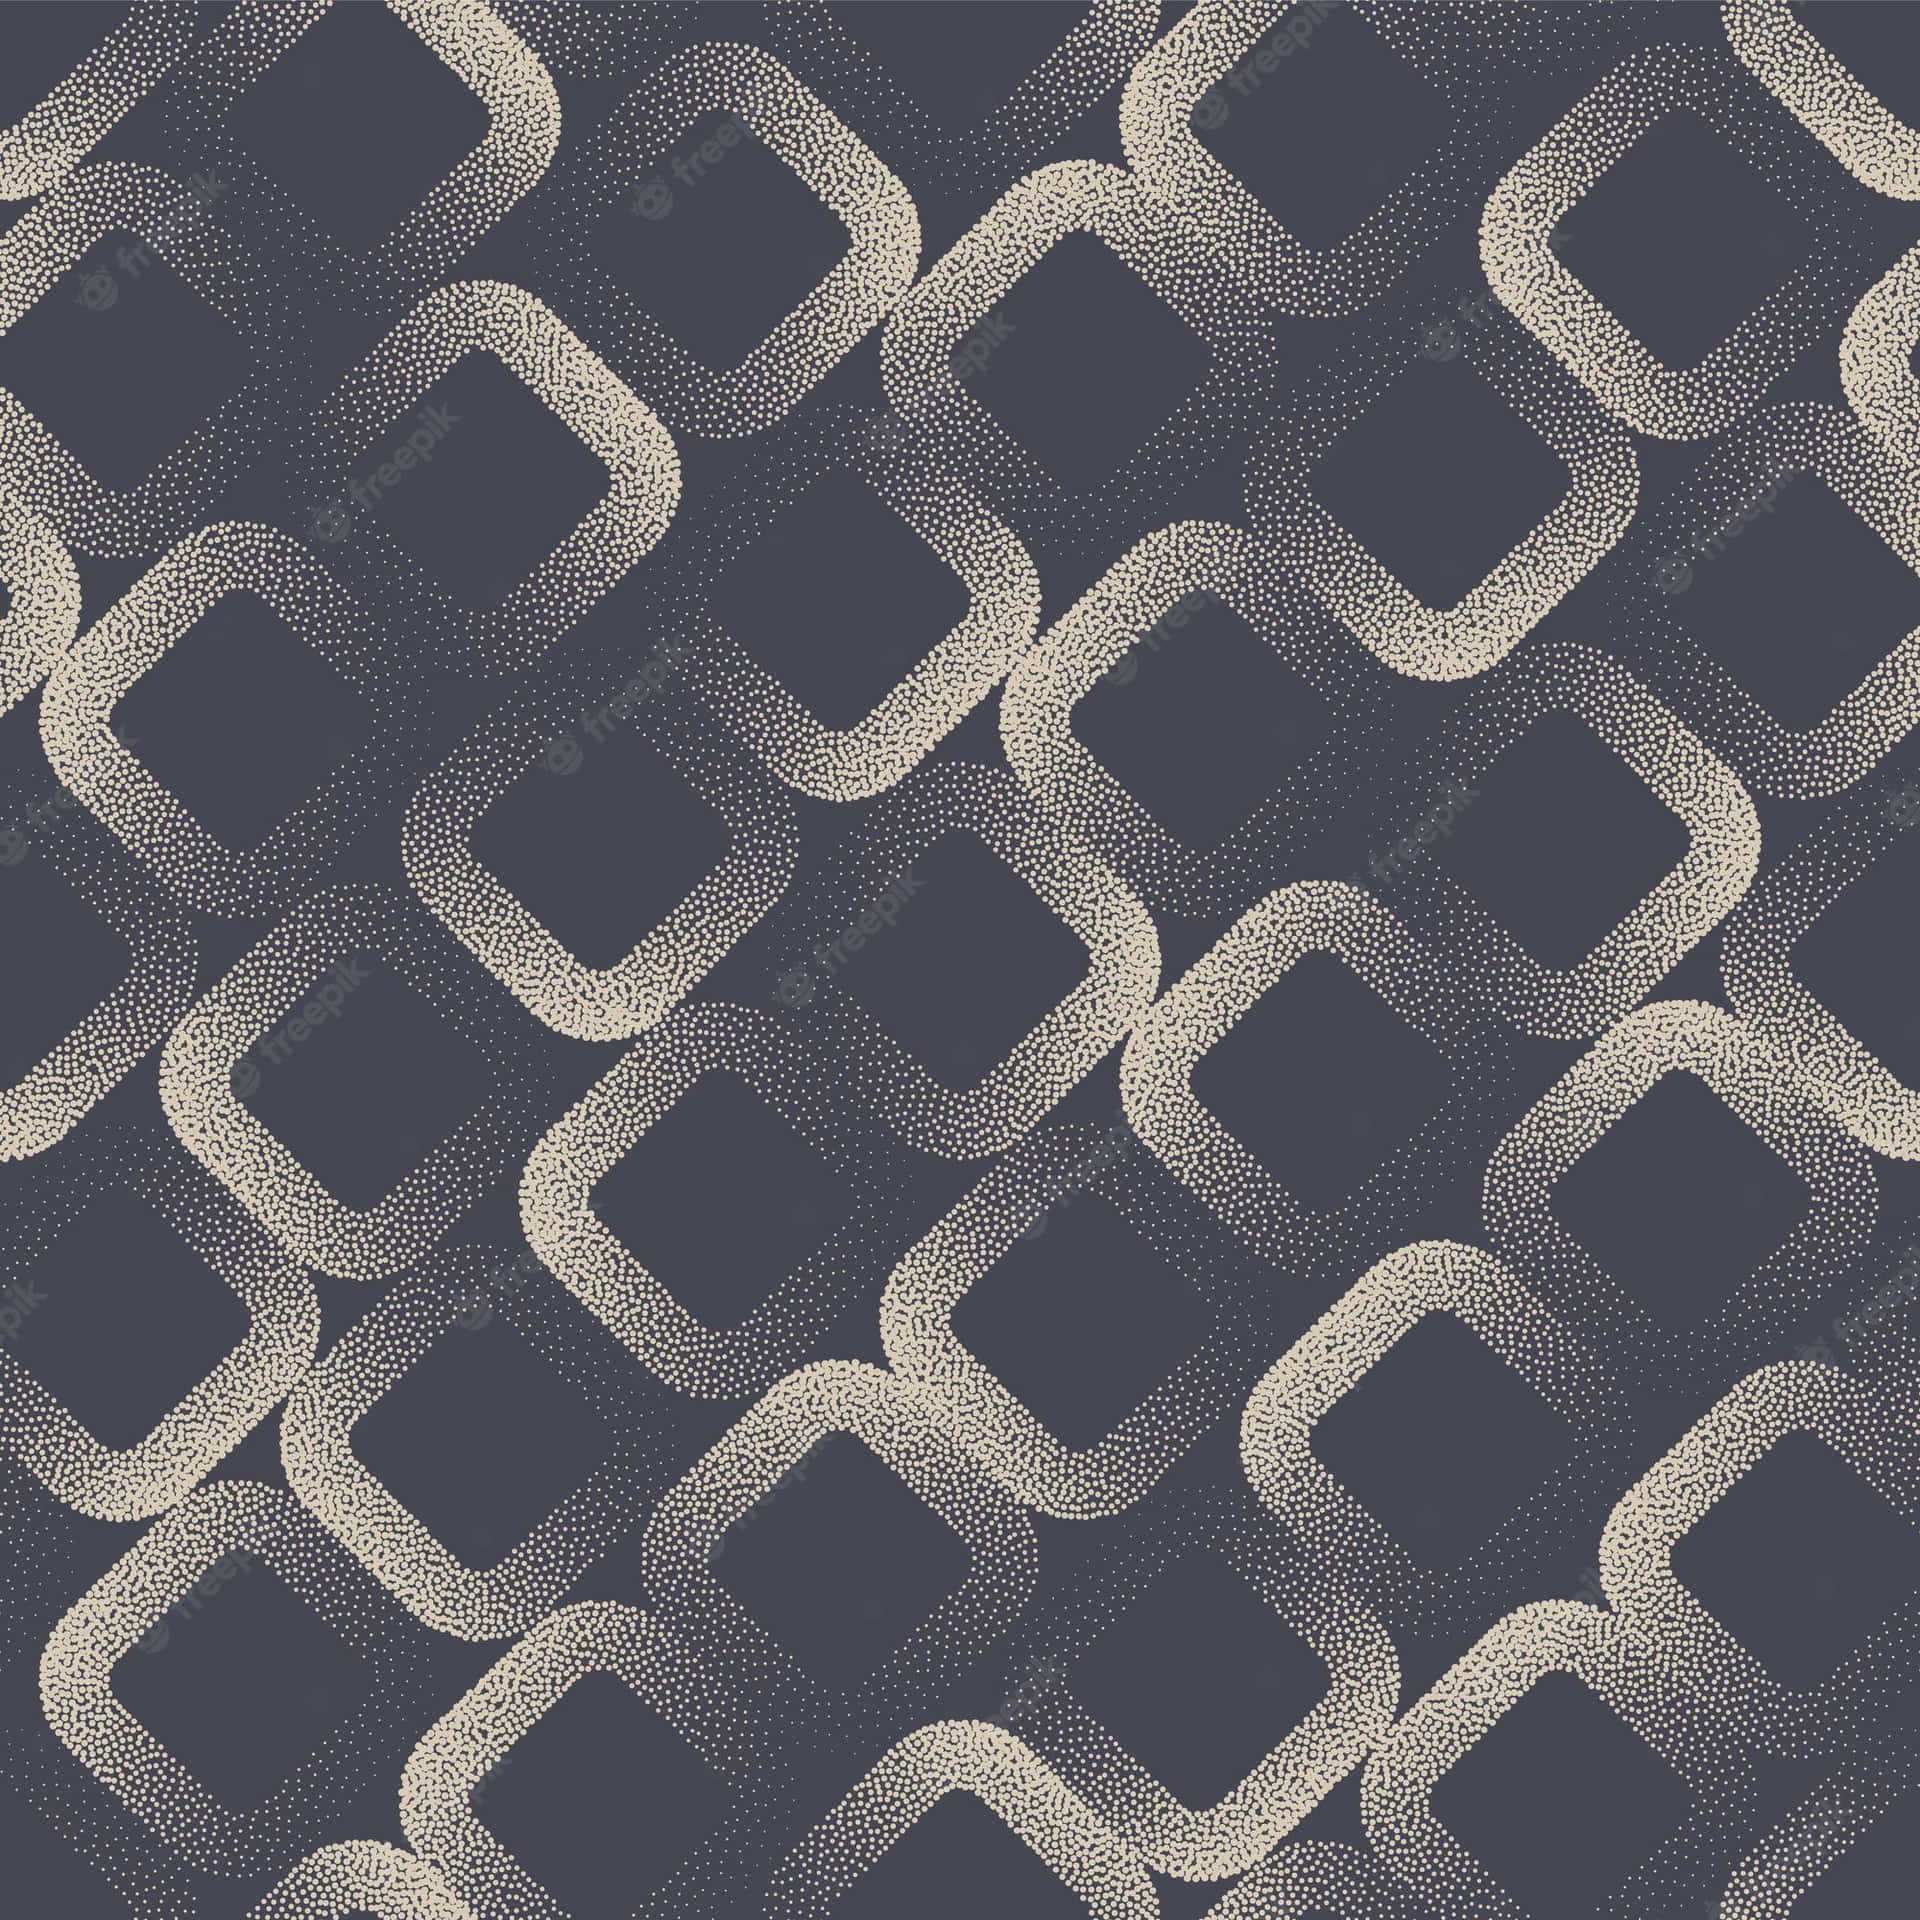 Repetitive Wallpaper